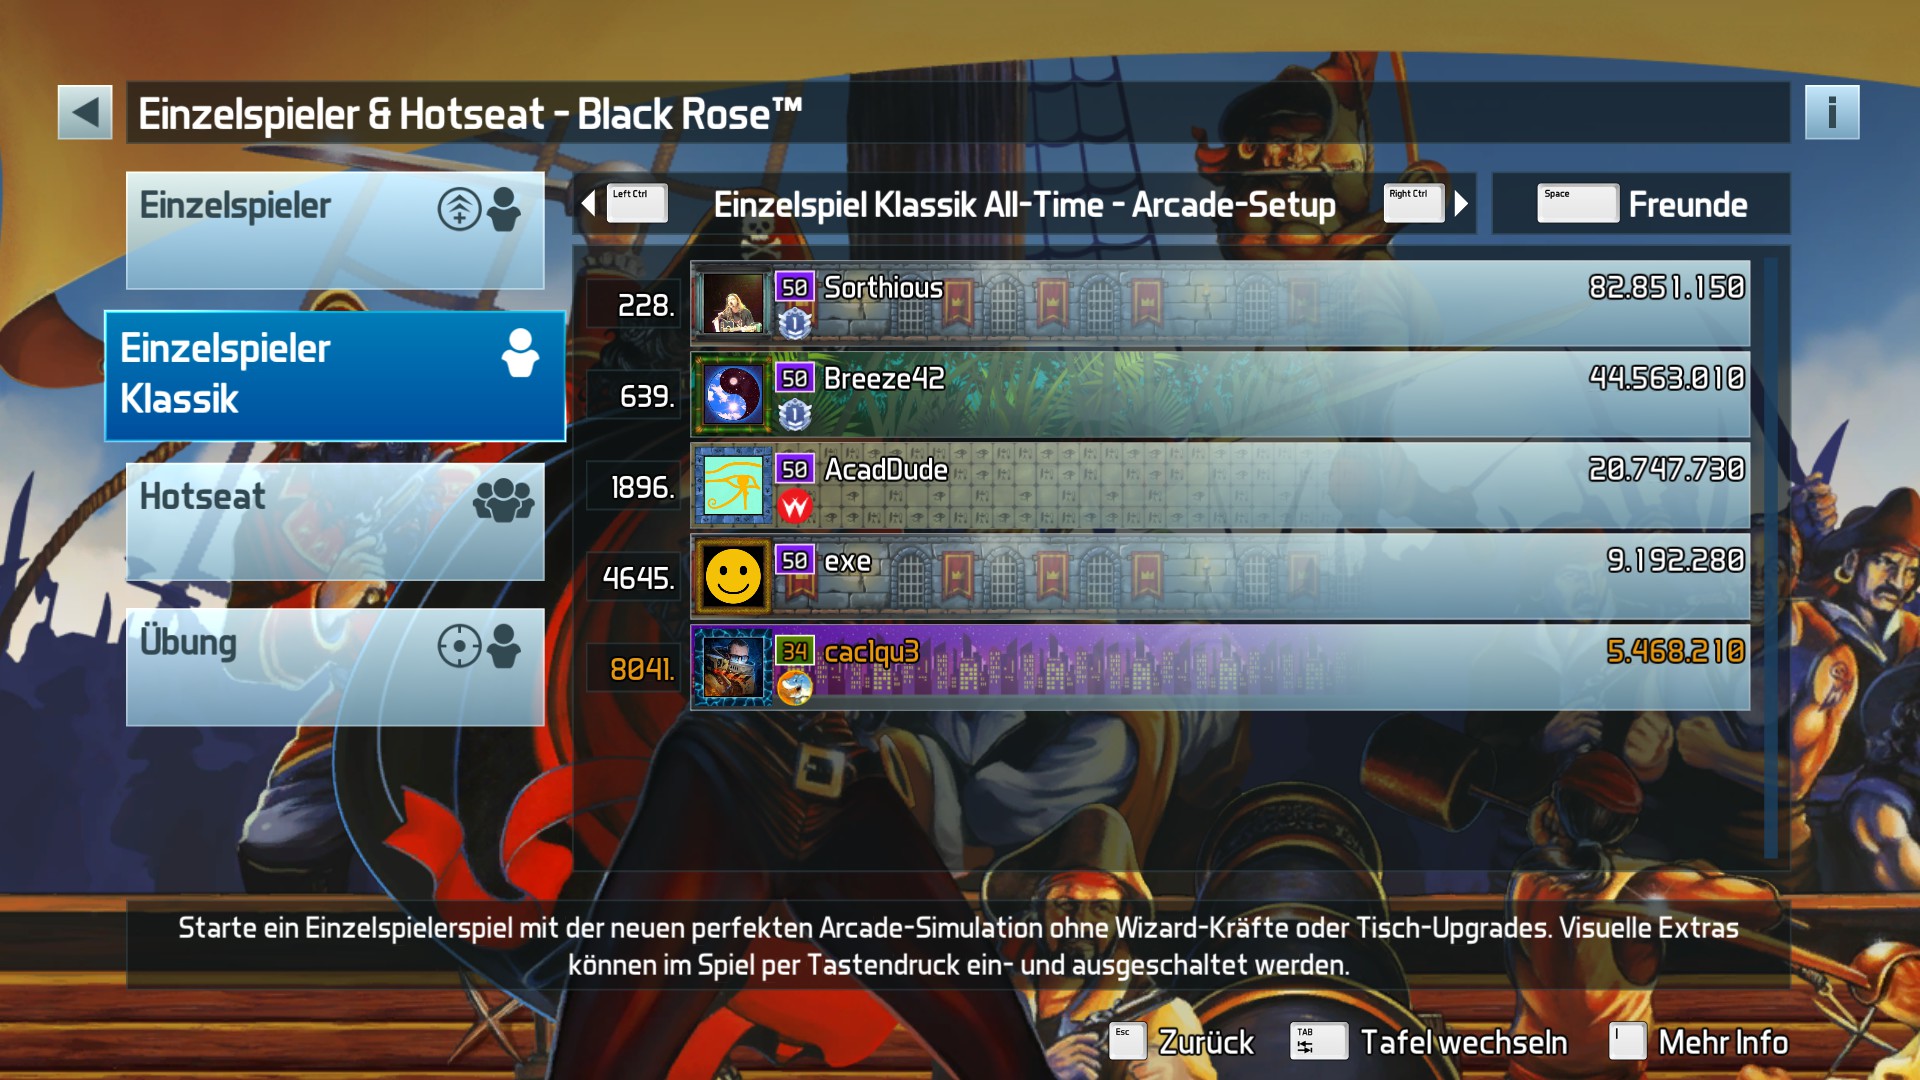 e2e4: Pinball FX3: Black Rose [Arcade] (PC) 5,468,210 points on 2022-05-02 01:41:30